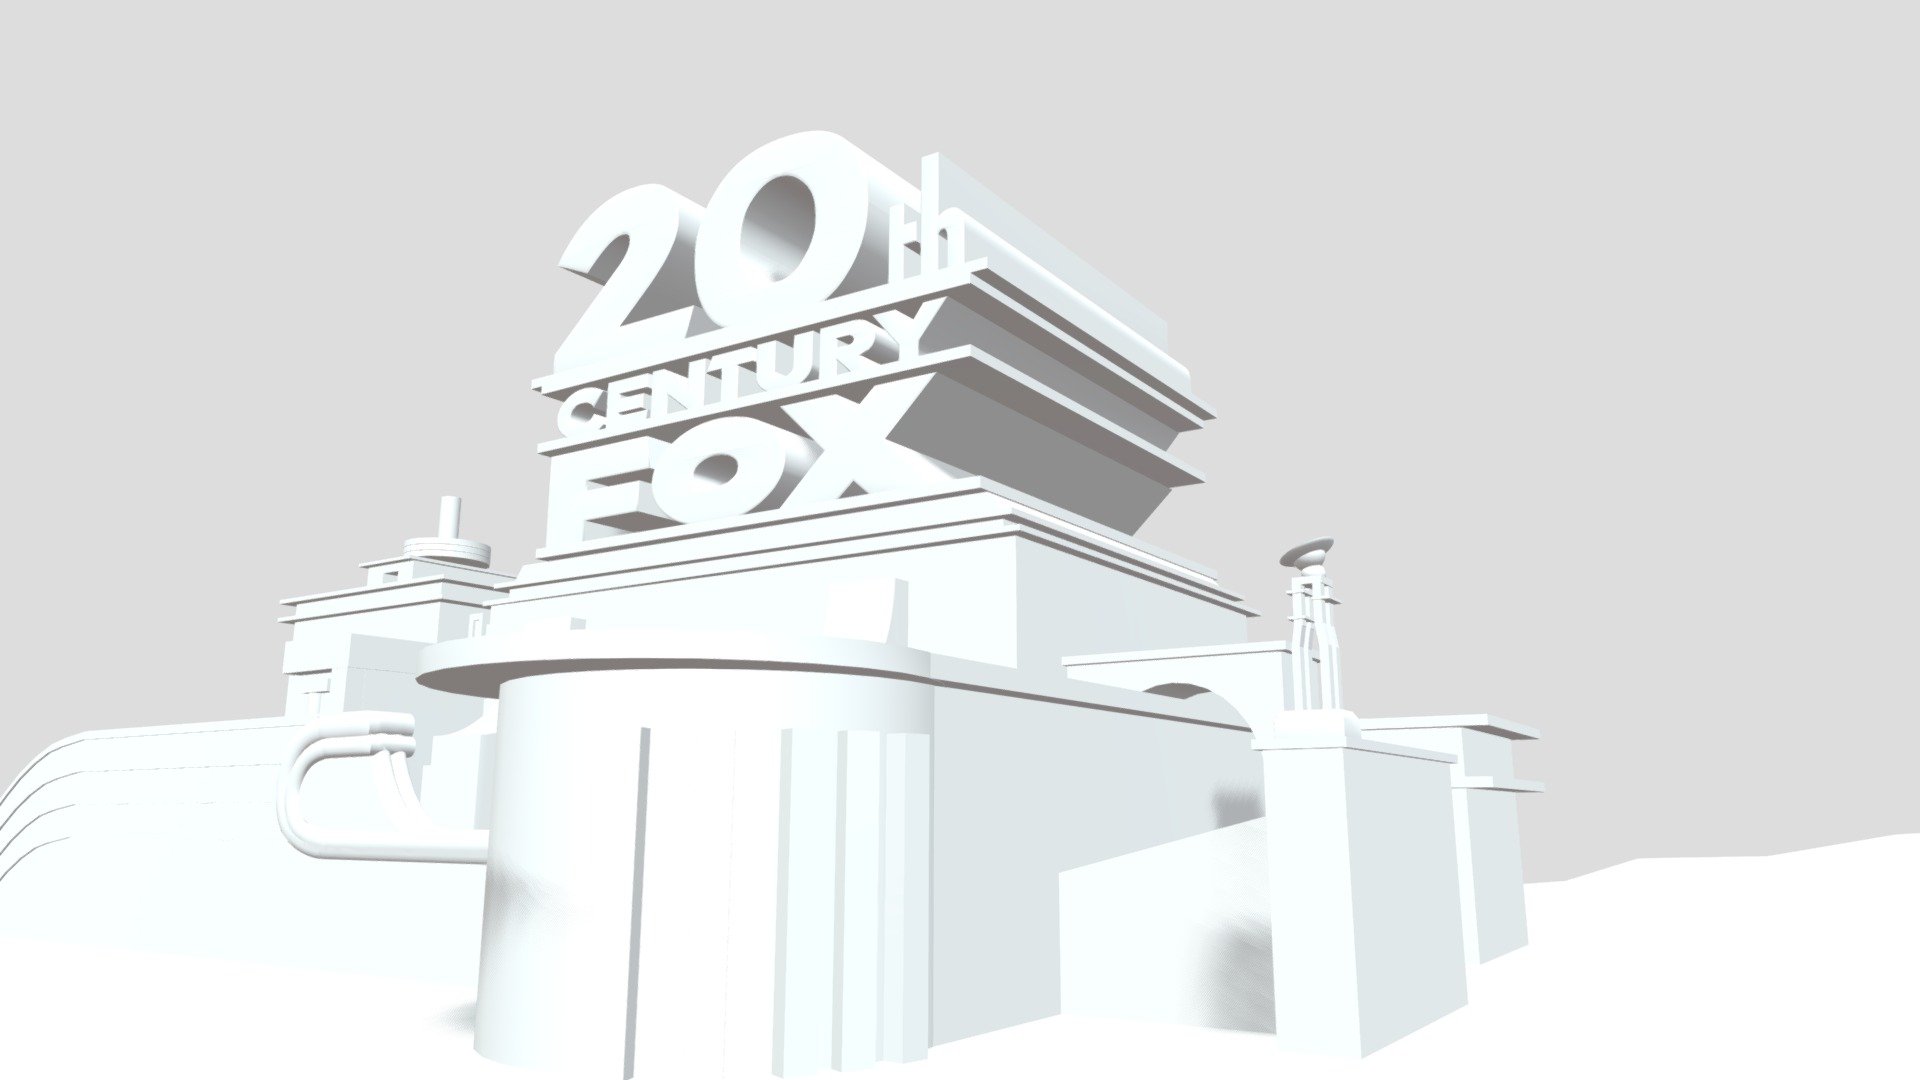 20th Century Fox (Prototype Ver., June 1994) - Download Free 3D